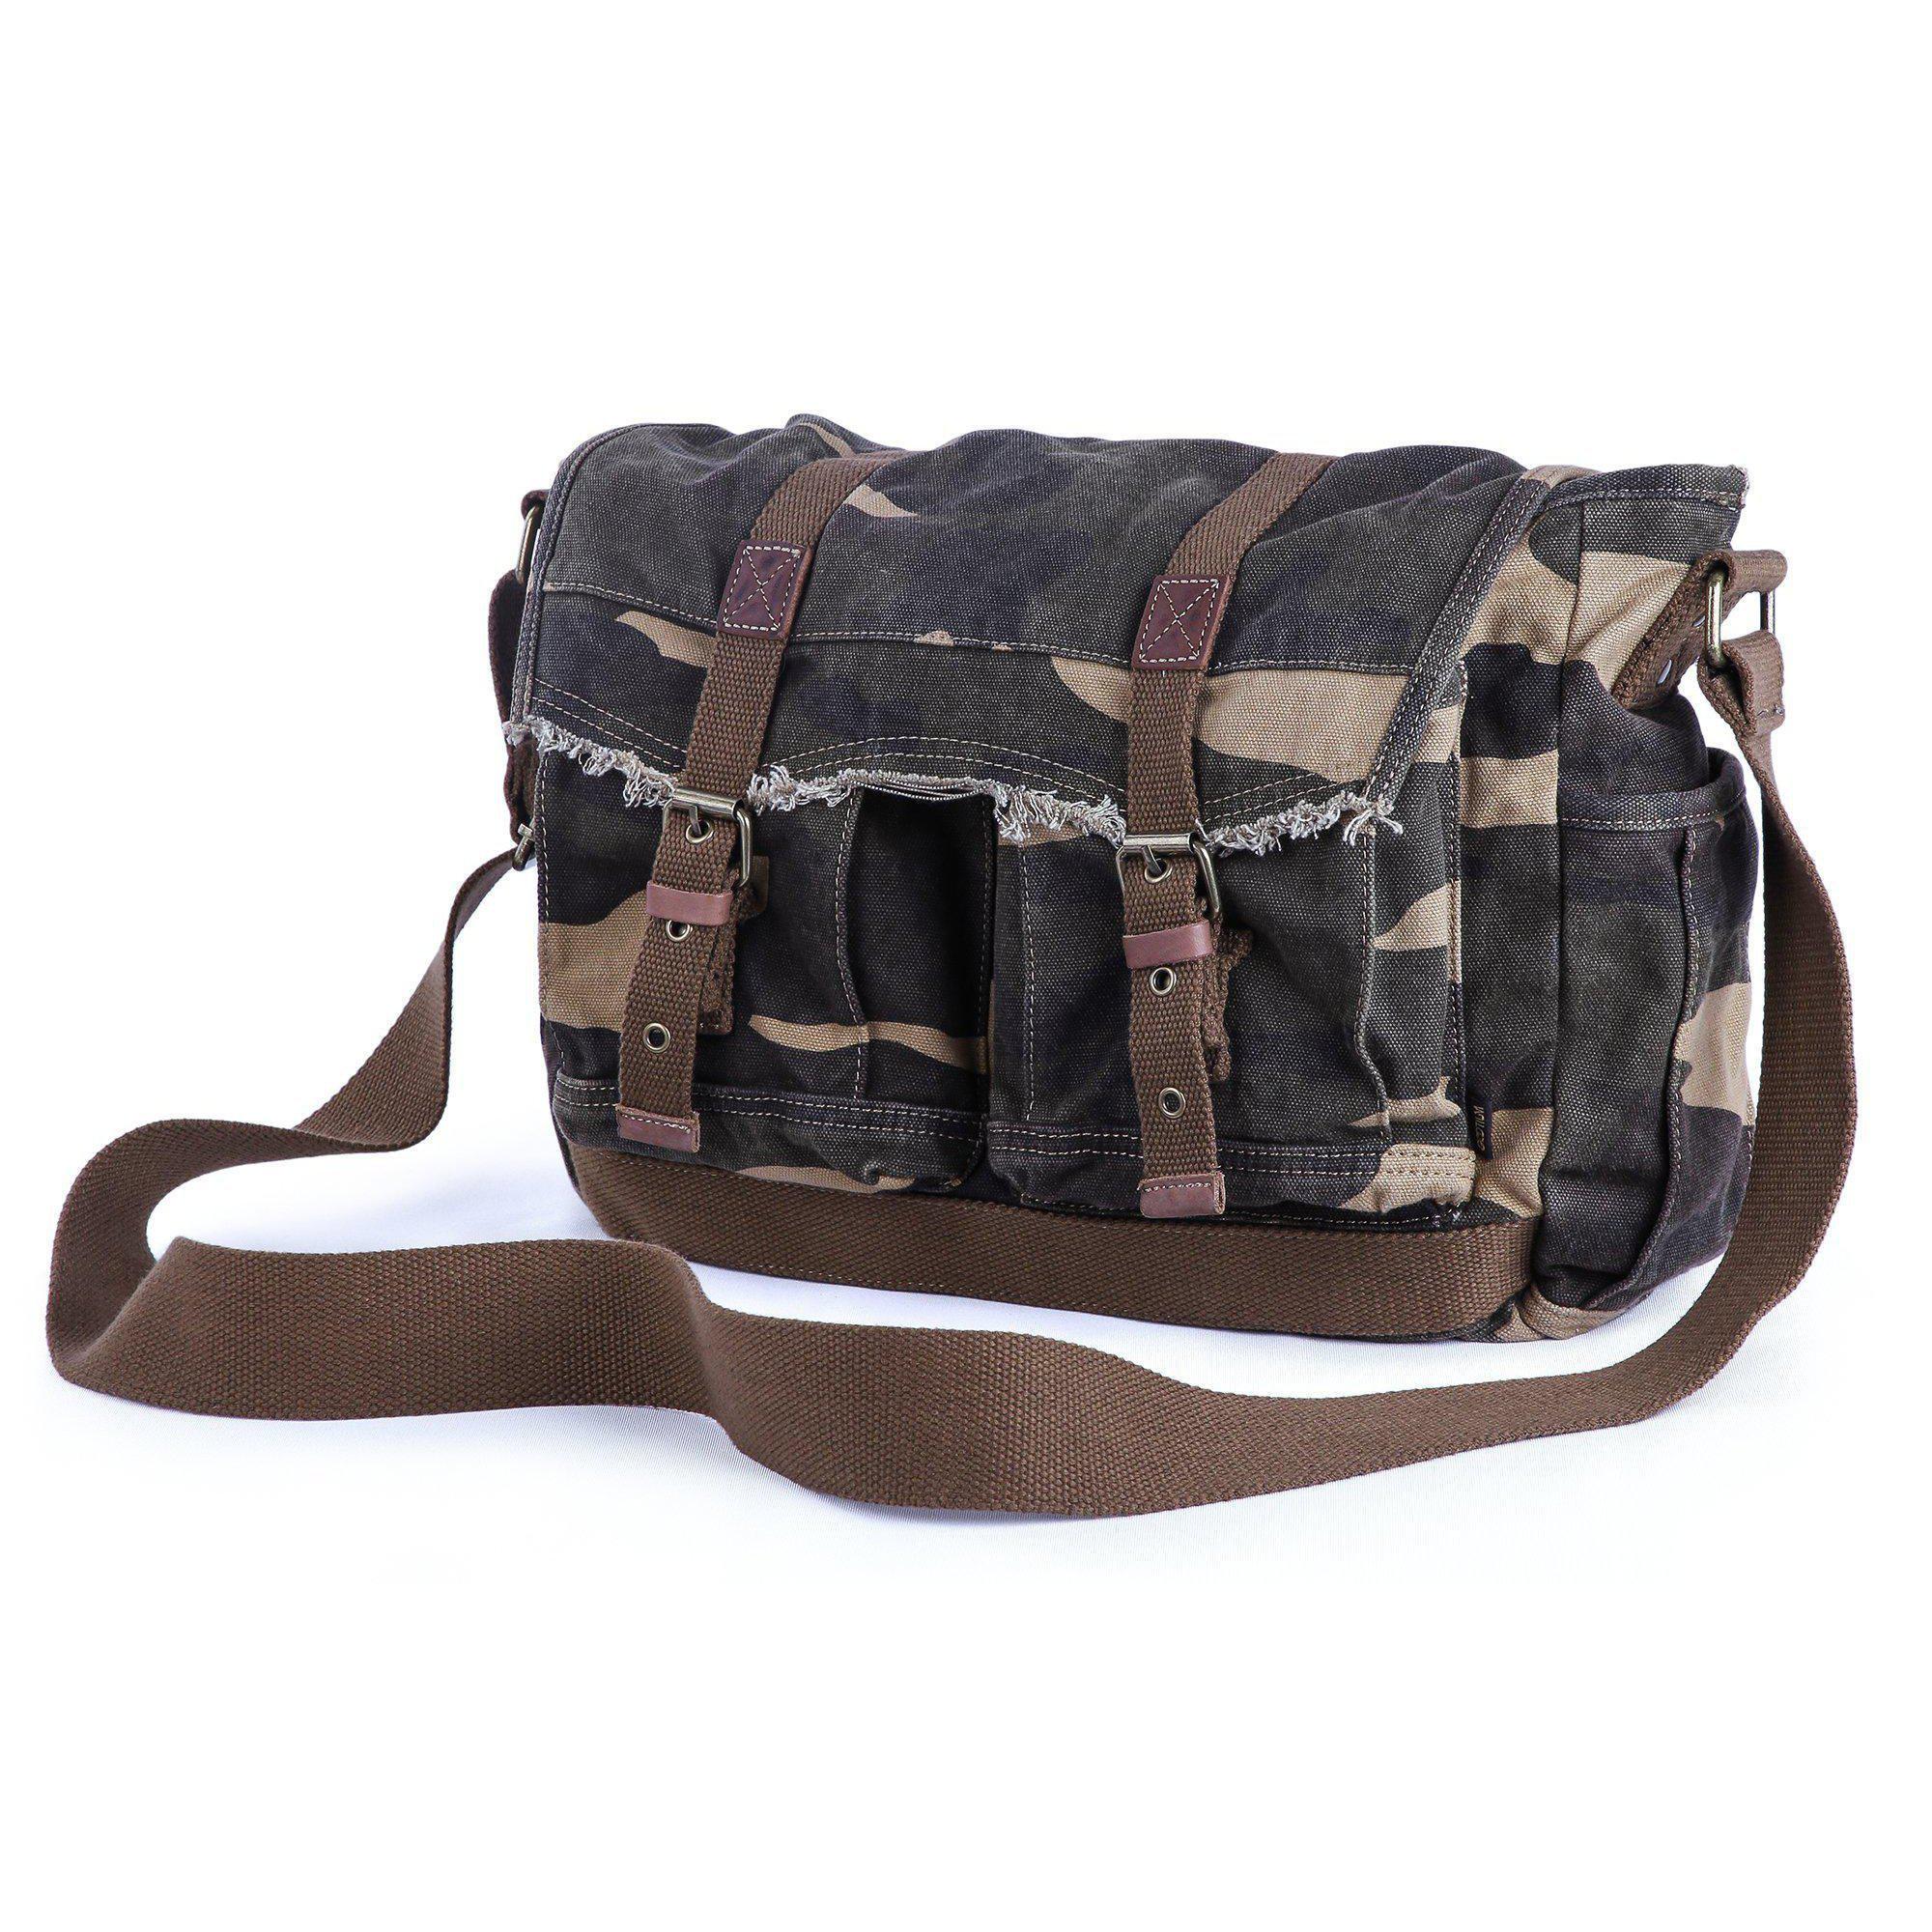 Gootium Canvas Messenger Bag Vintage Shoulder Bag 16 Laptop Sleeve Bag  Courier Style Purse Crossbody Bag